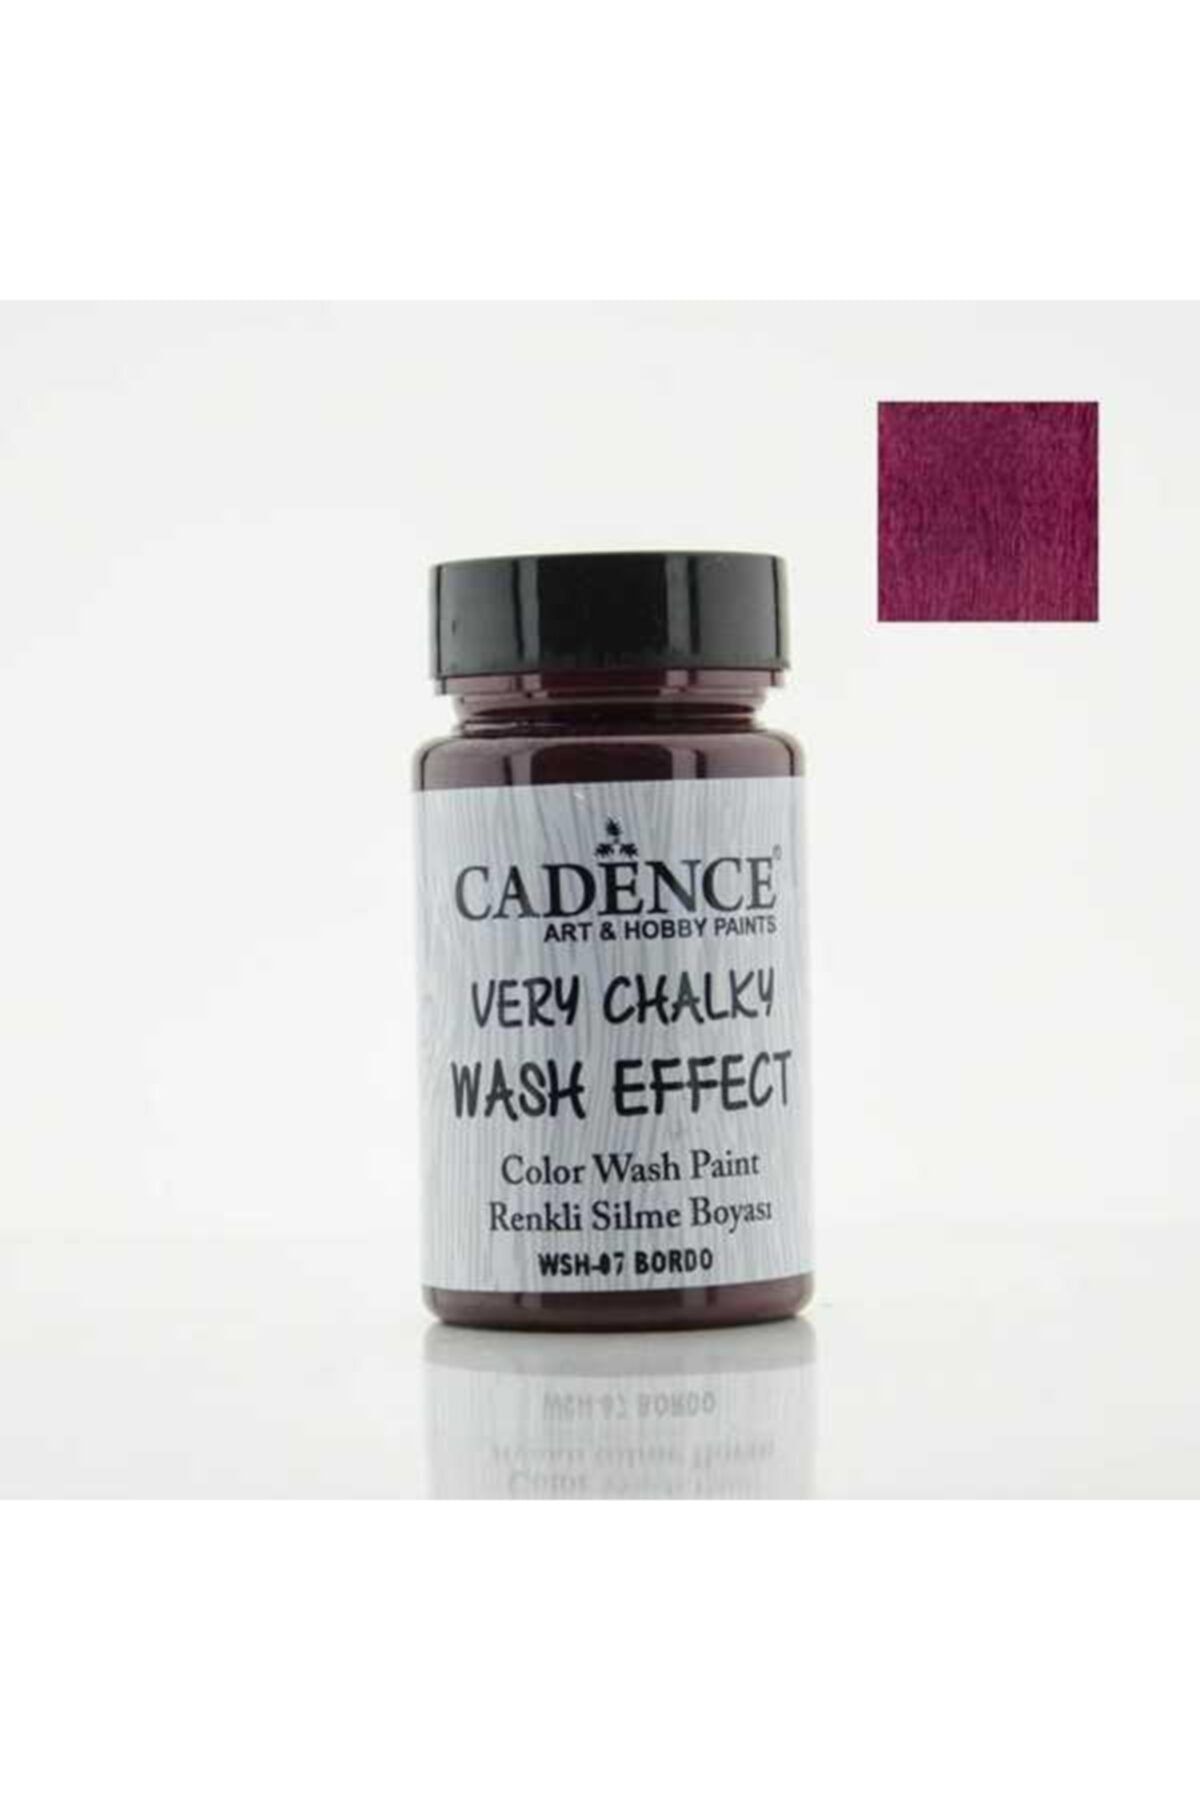 Cadence Wash Effect Renkli Silme Boyası 90 ml. 07 Bordo